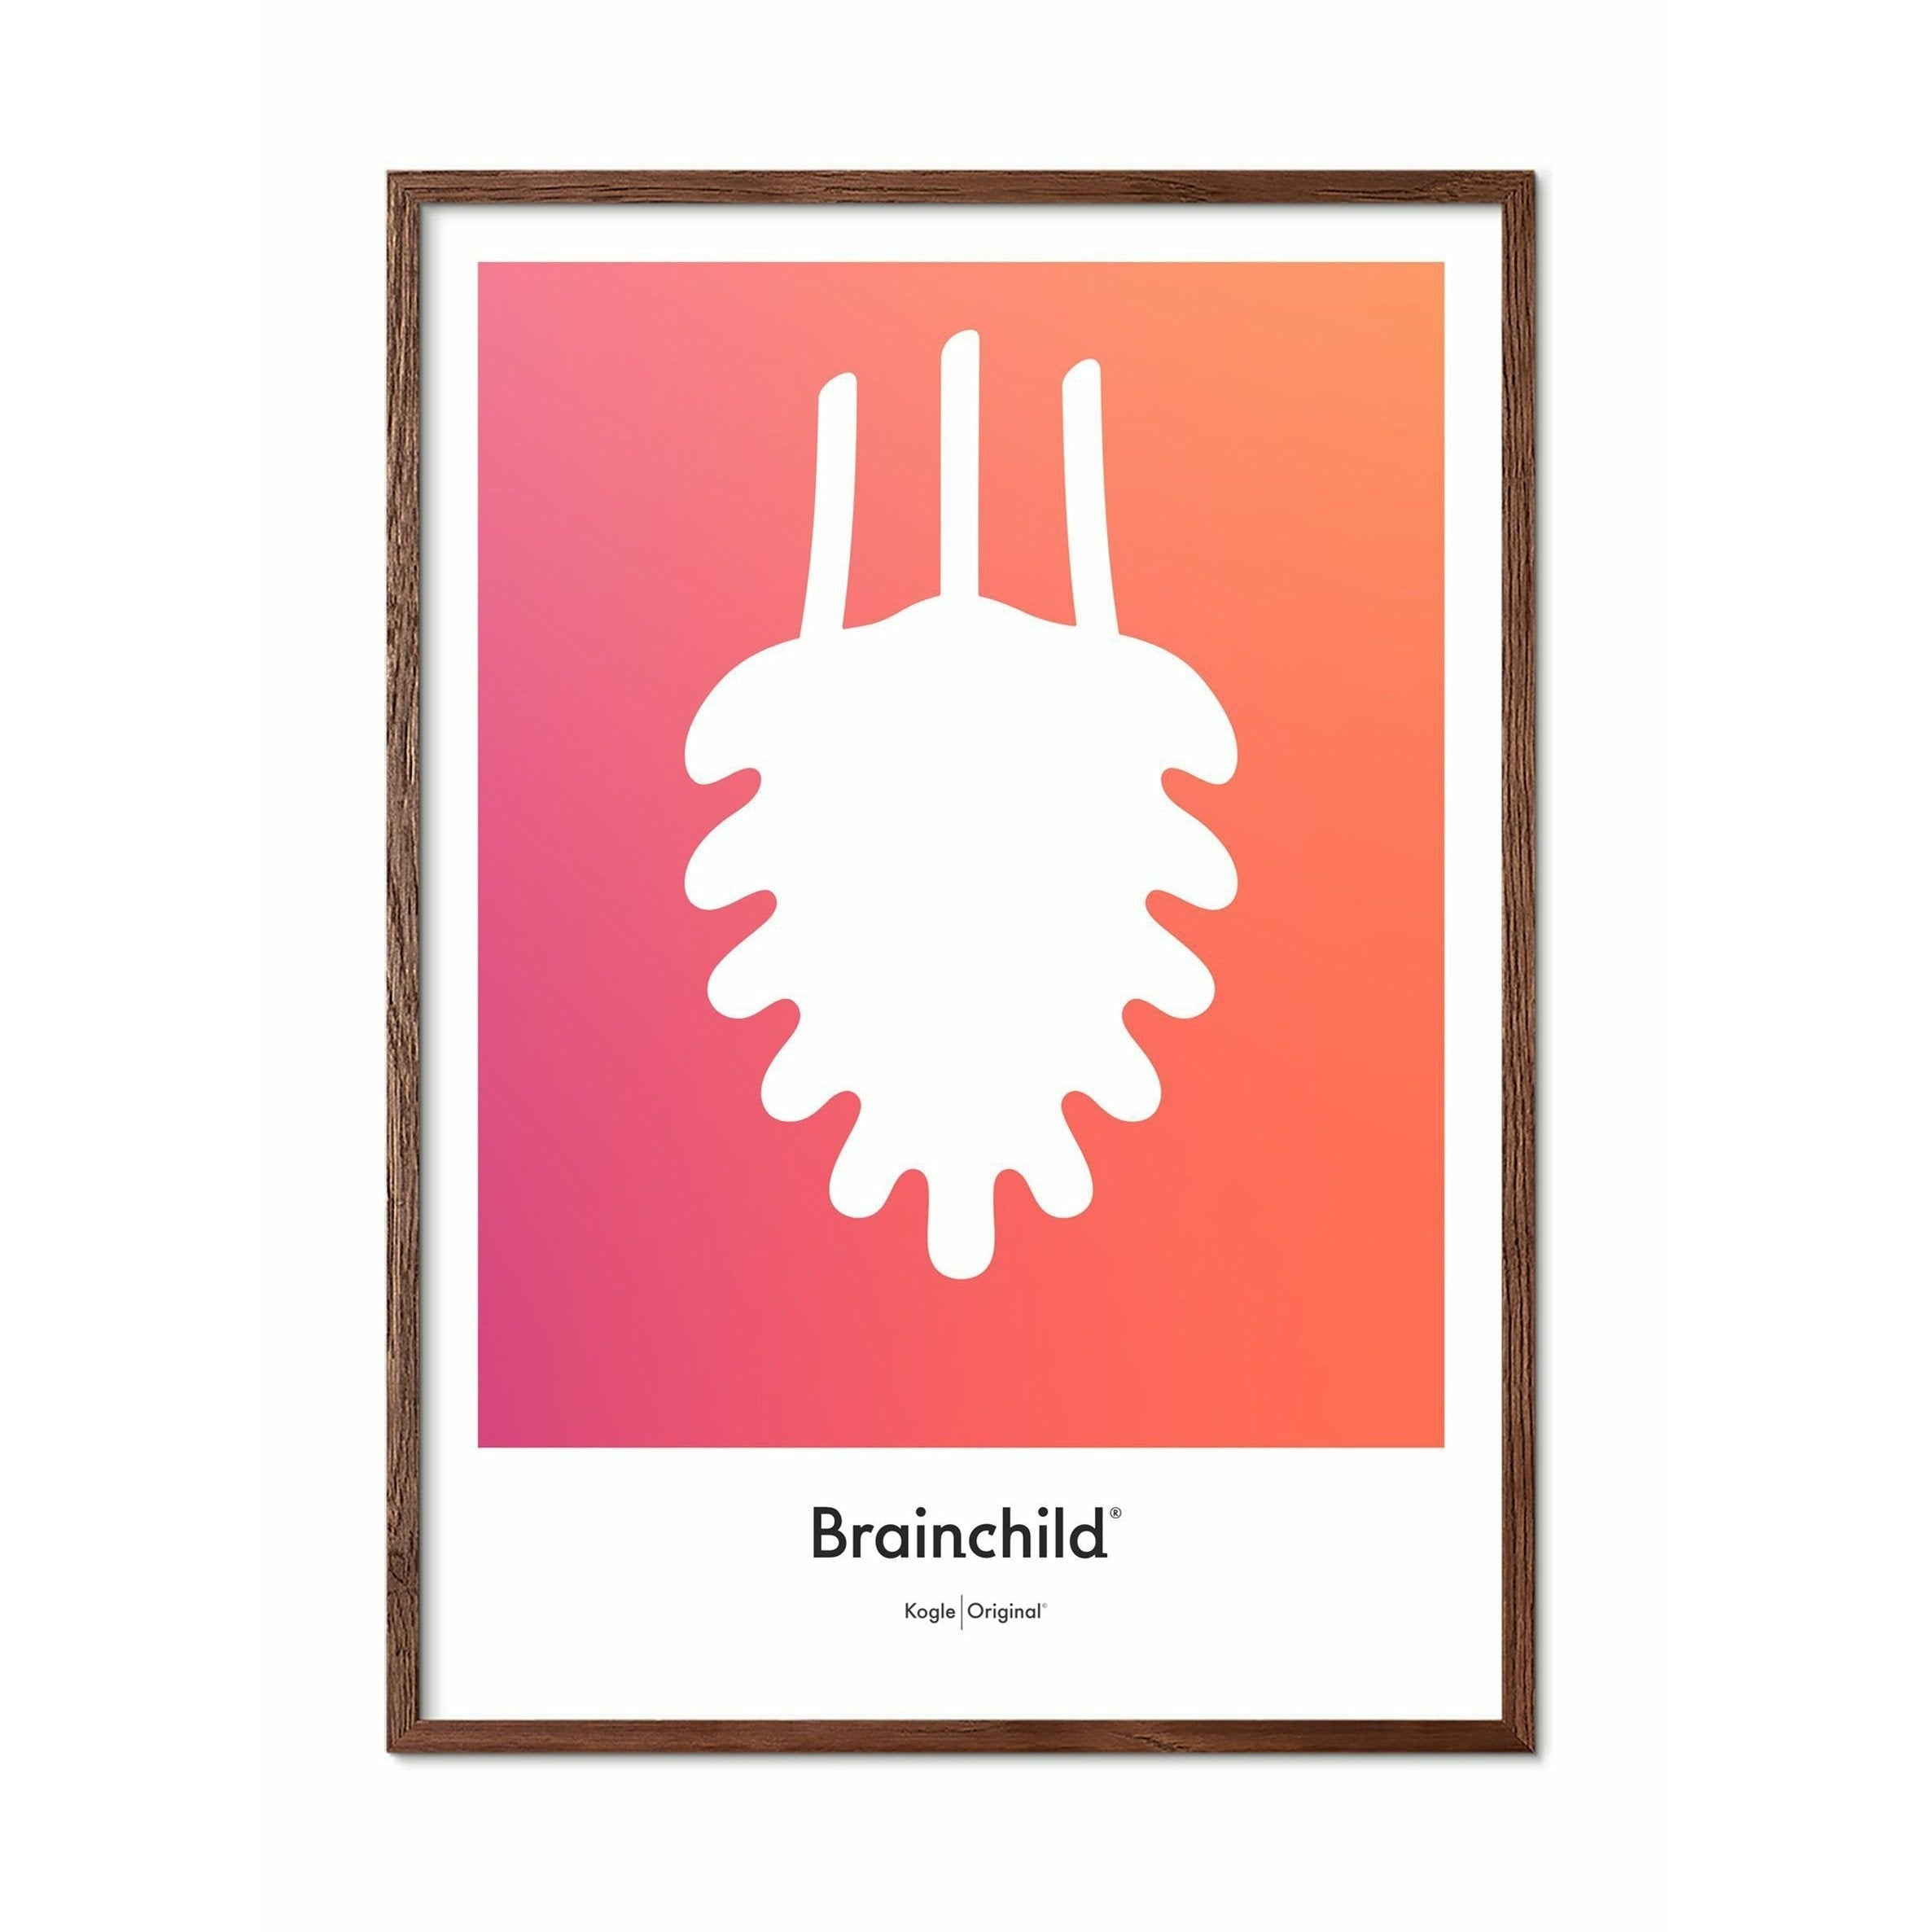 Brainchild Kogle Designikon Plakat, Ramme I Mørkt Træ 30X40 Cm, Orange